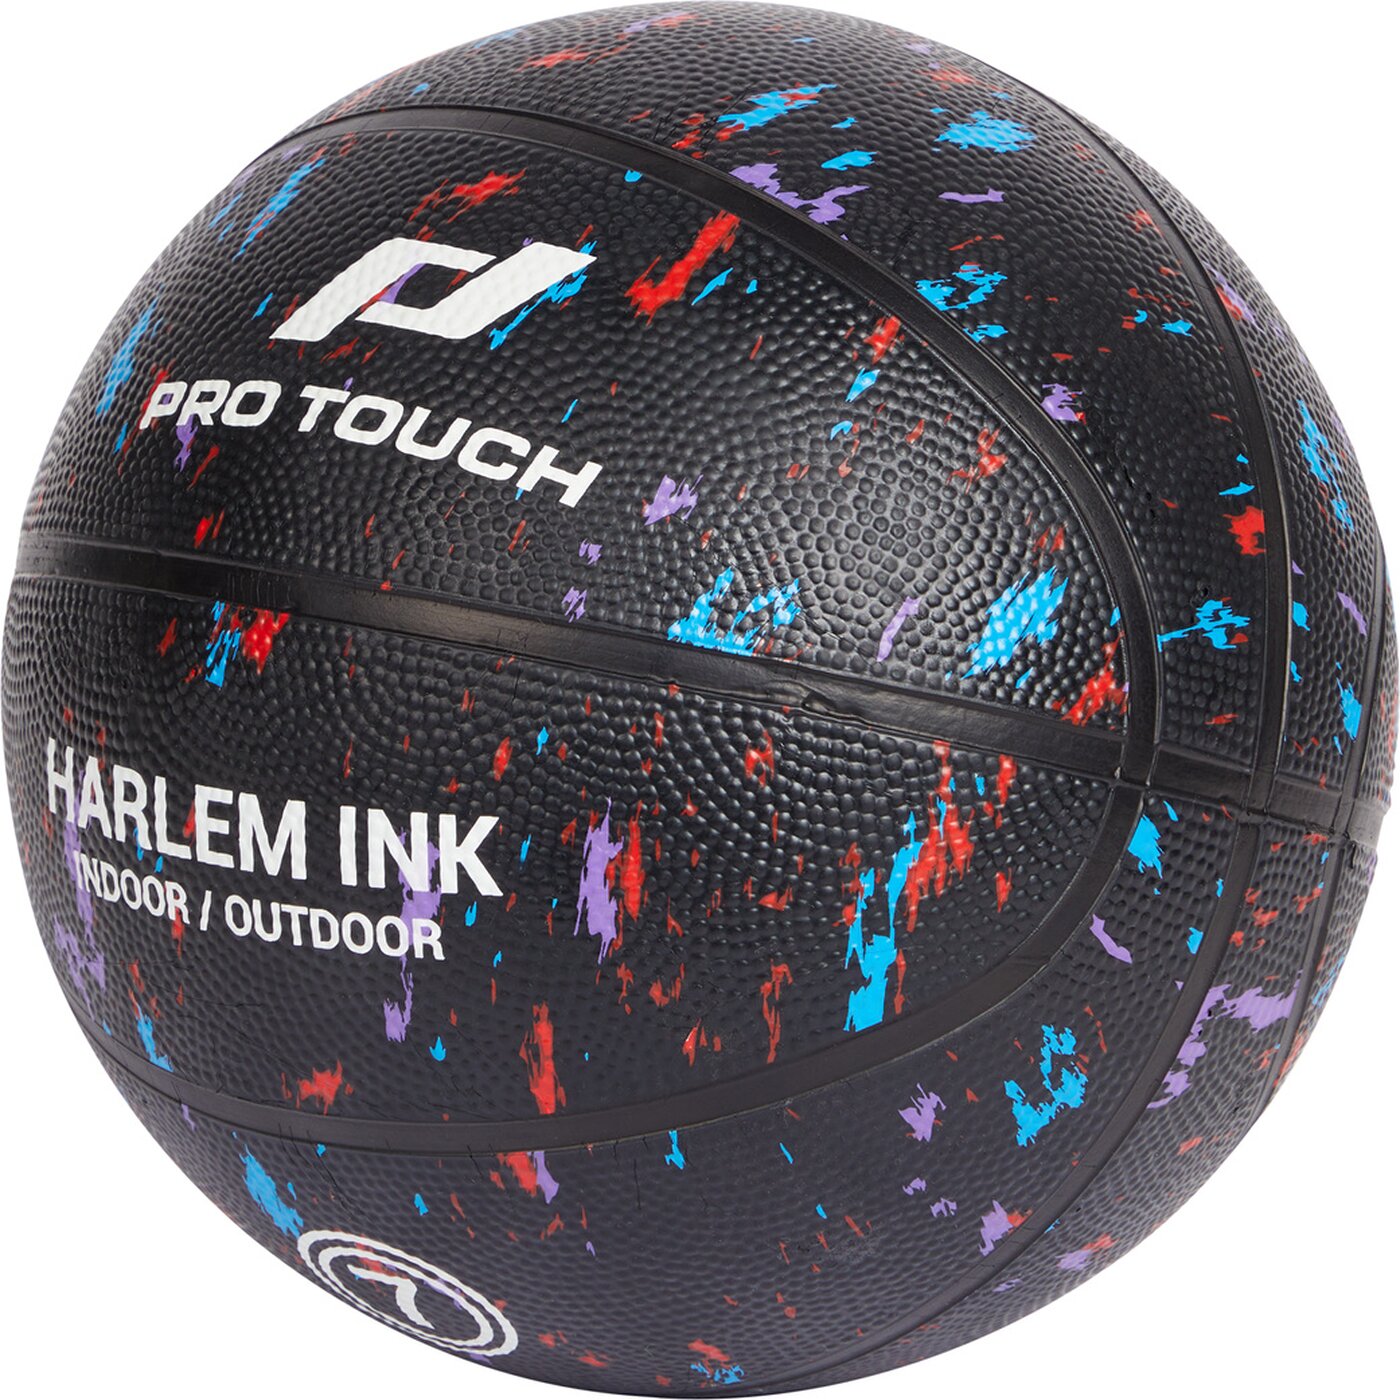 PRO TOUCH Basketball Harlem Ink 900 BLACK/MULTICOLOR online kaufen